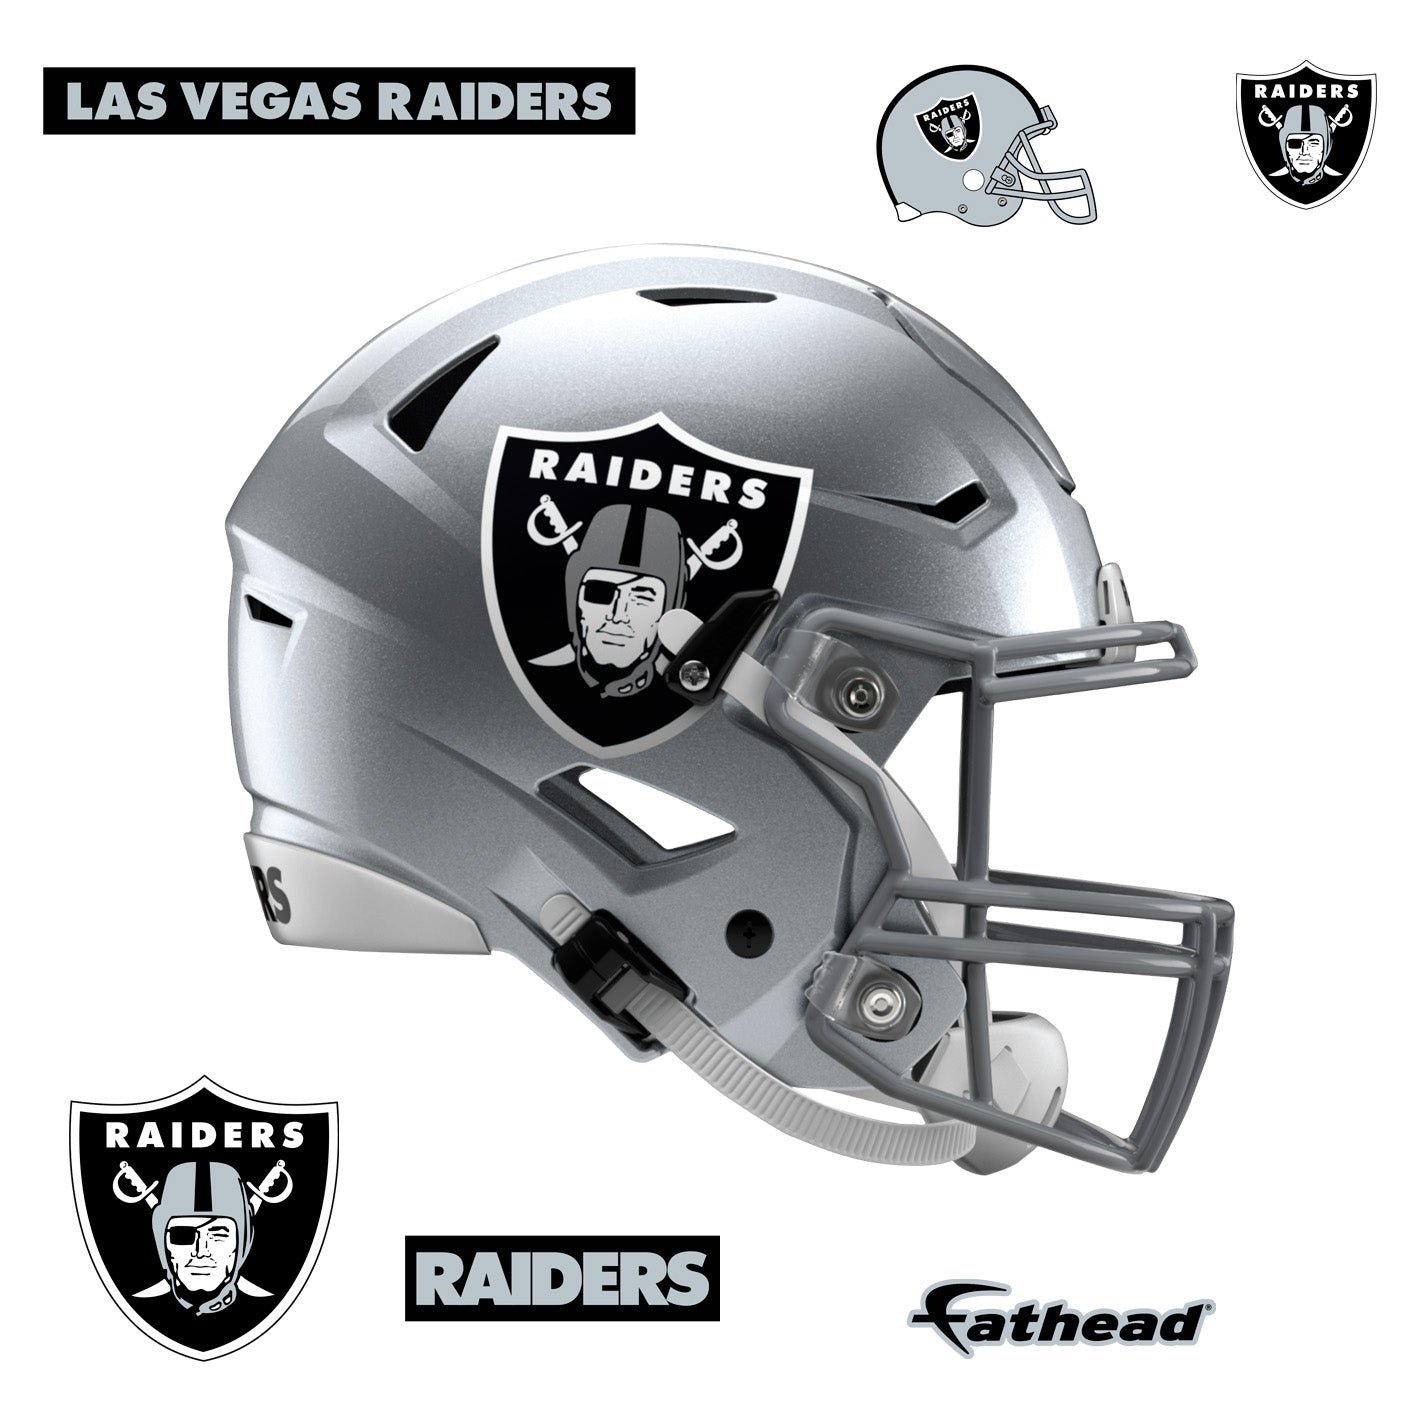 Fathead NFL Las Vegas Raiders Logo Giant Wall Decal Multi